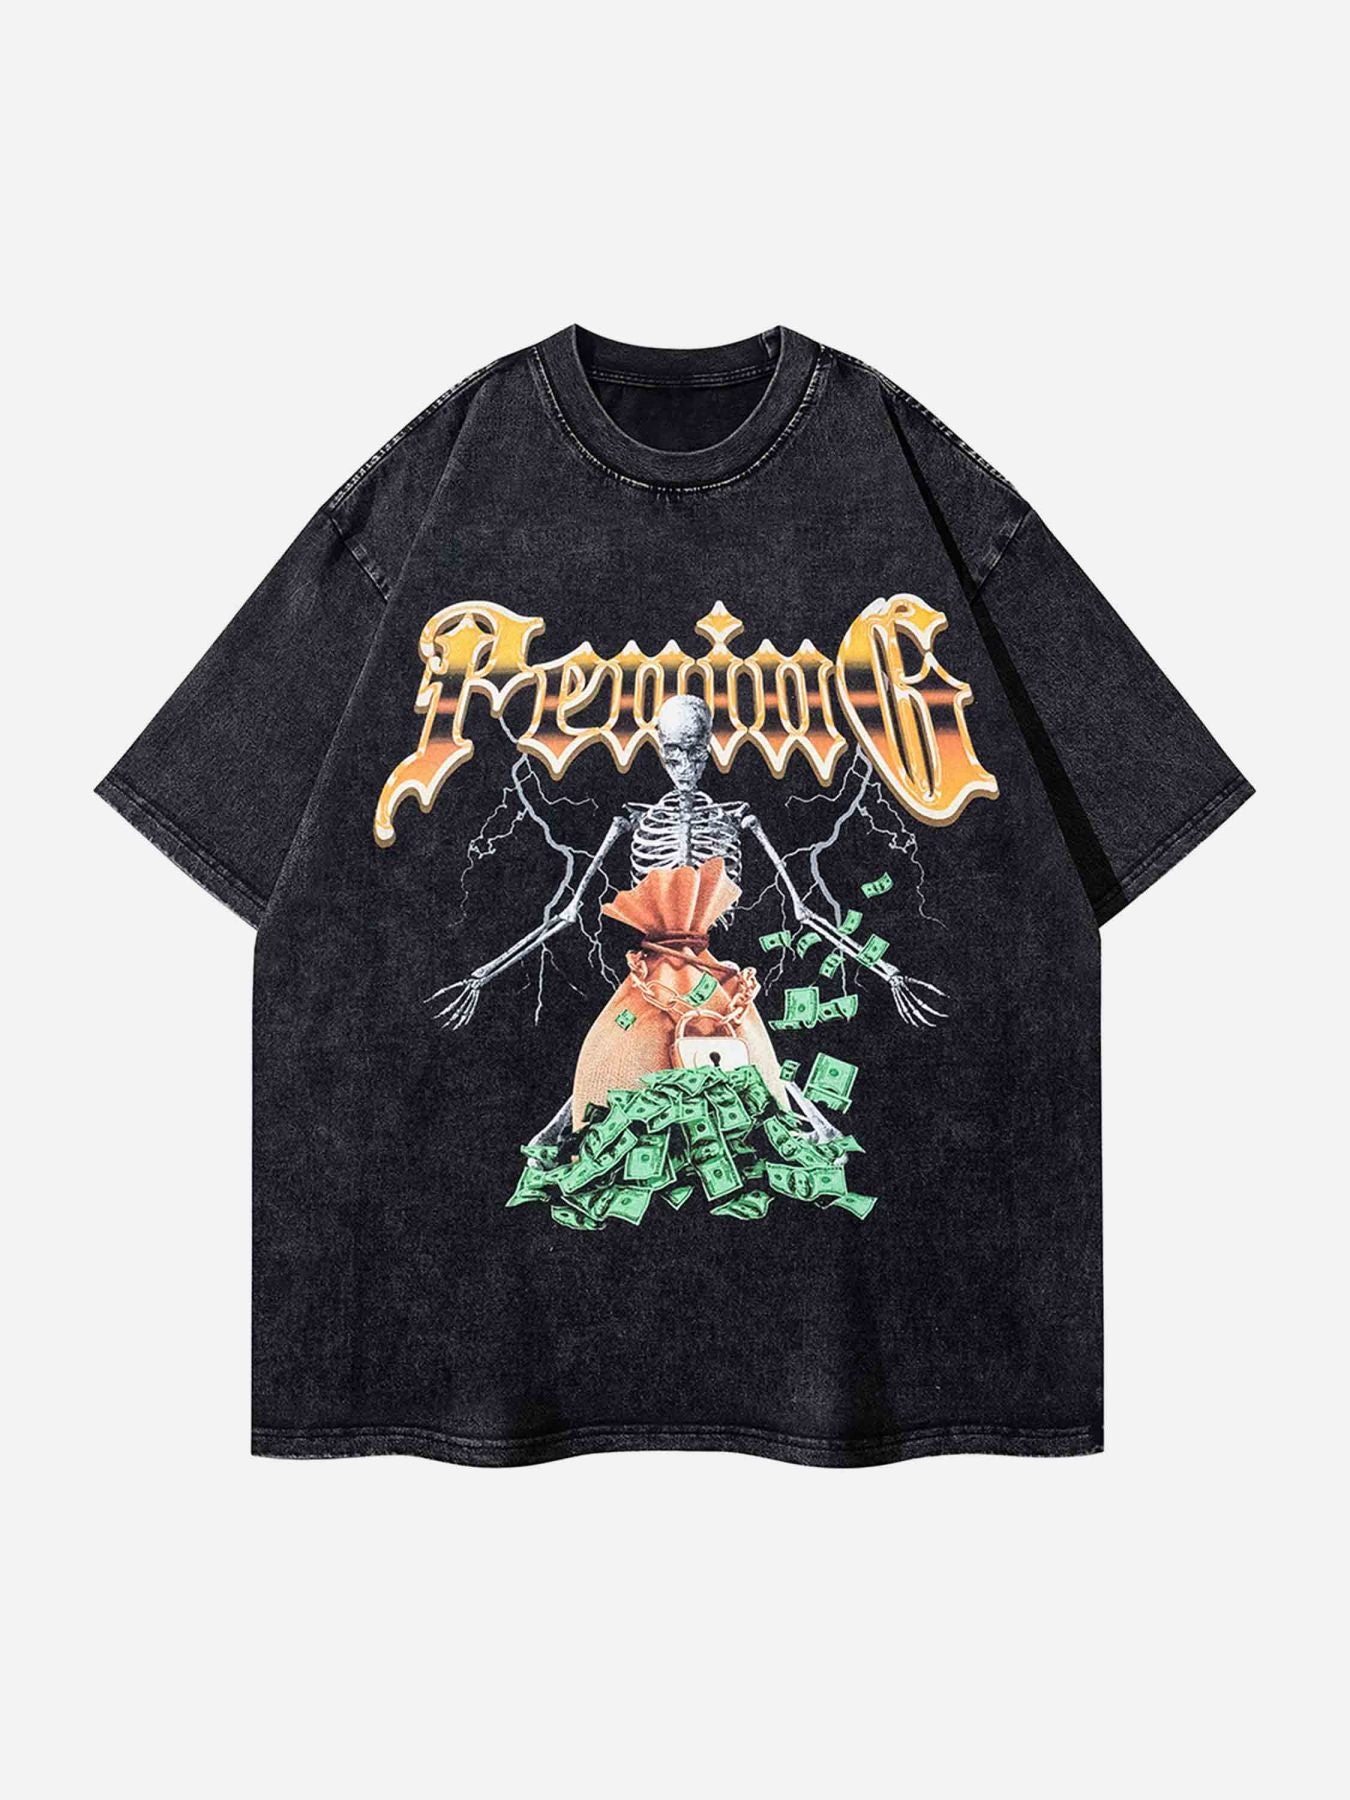 Thesupermade Hip Hop Skull Print T-shirt